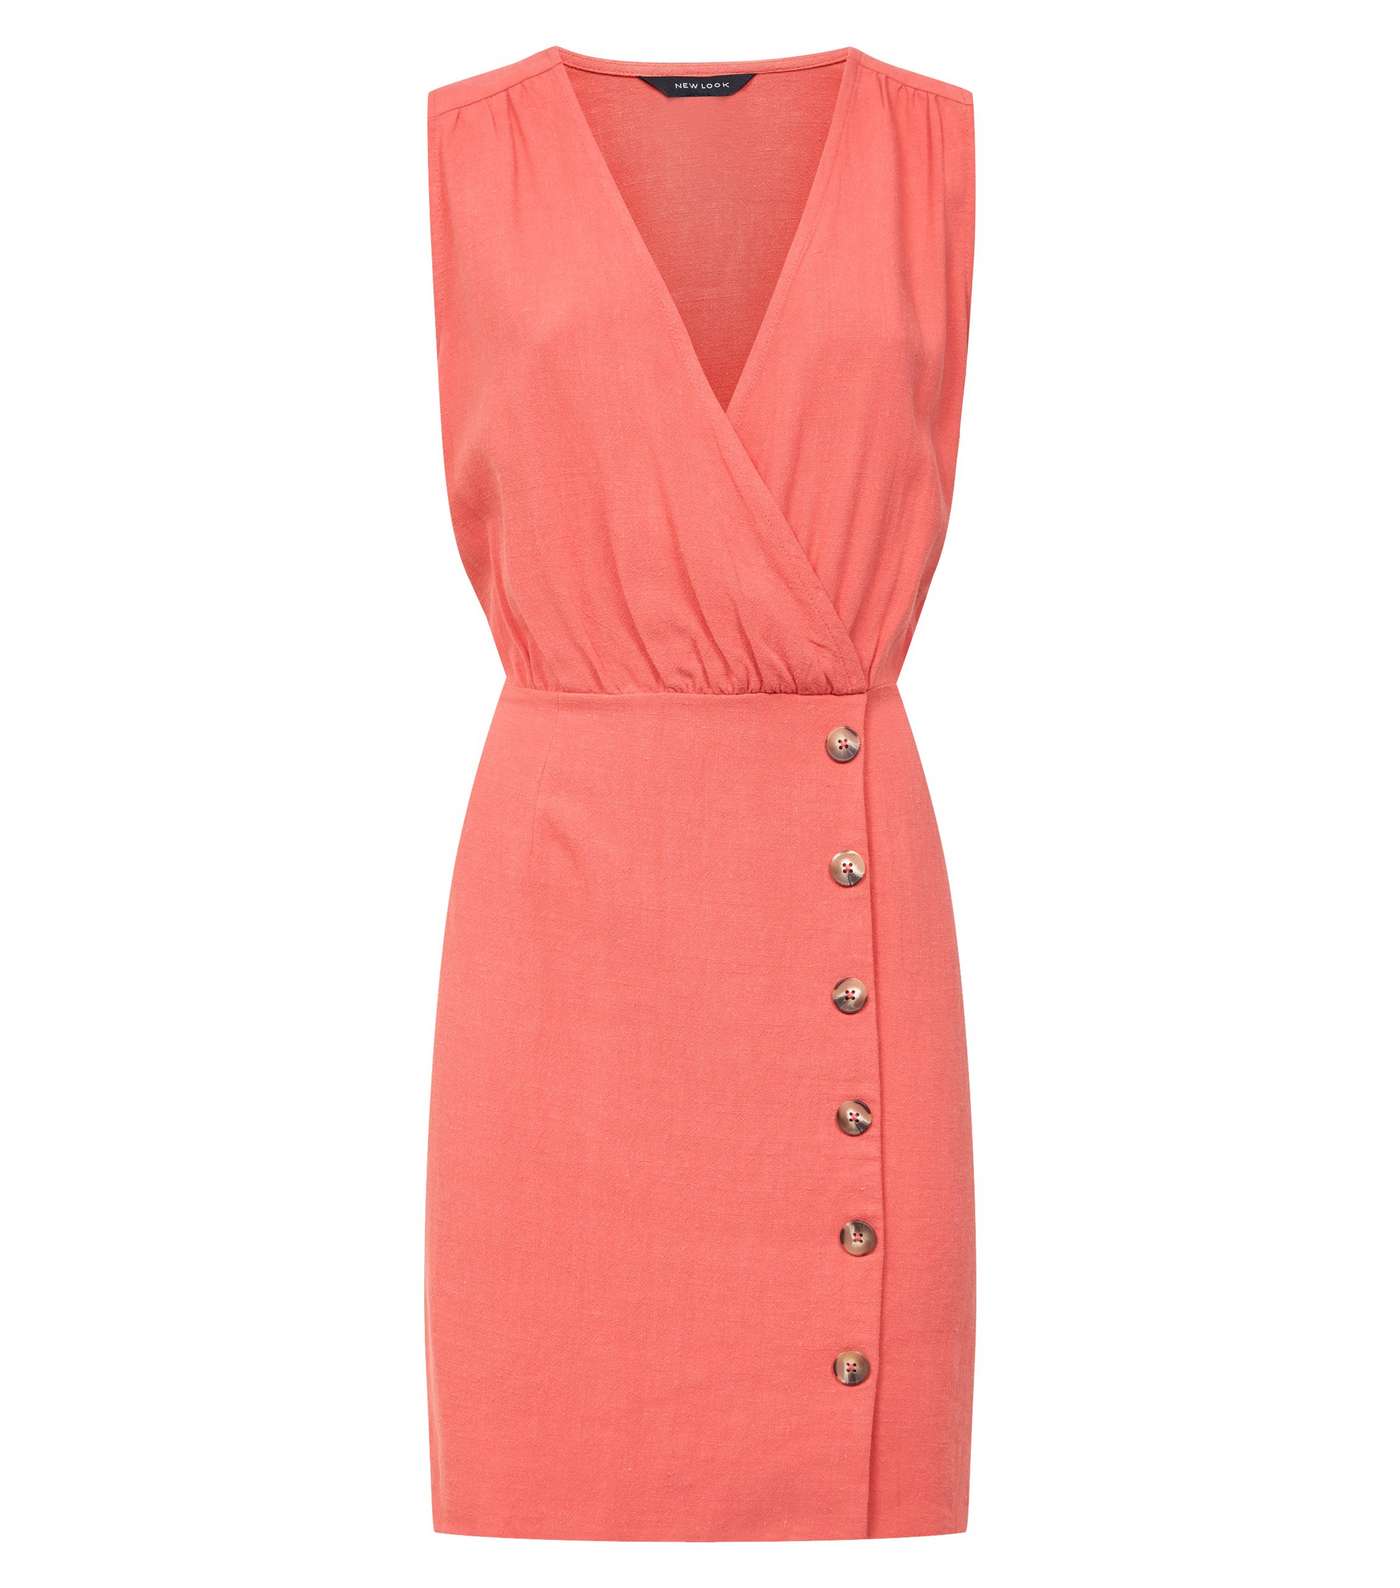 Coral Linen-Look Button Front Wrap Dress Image 4